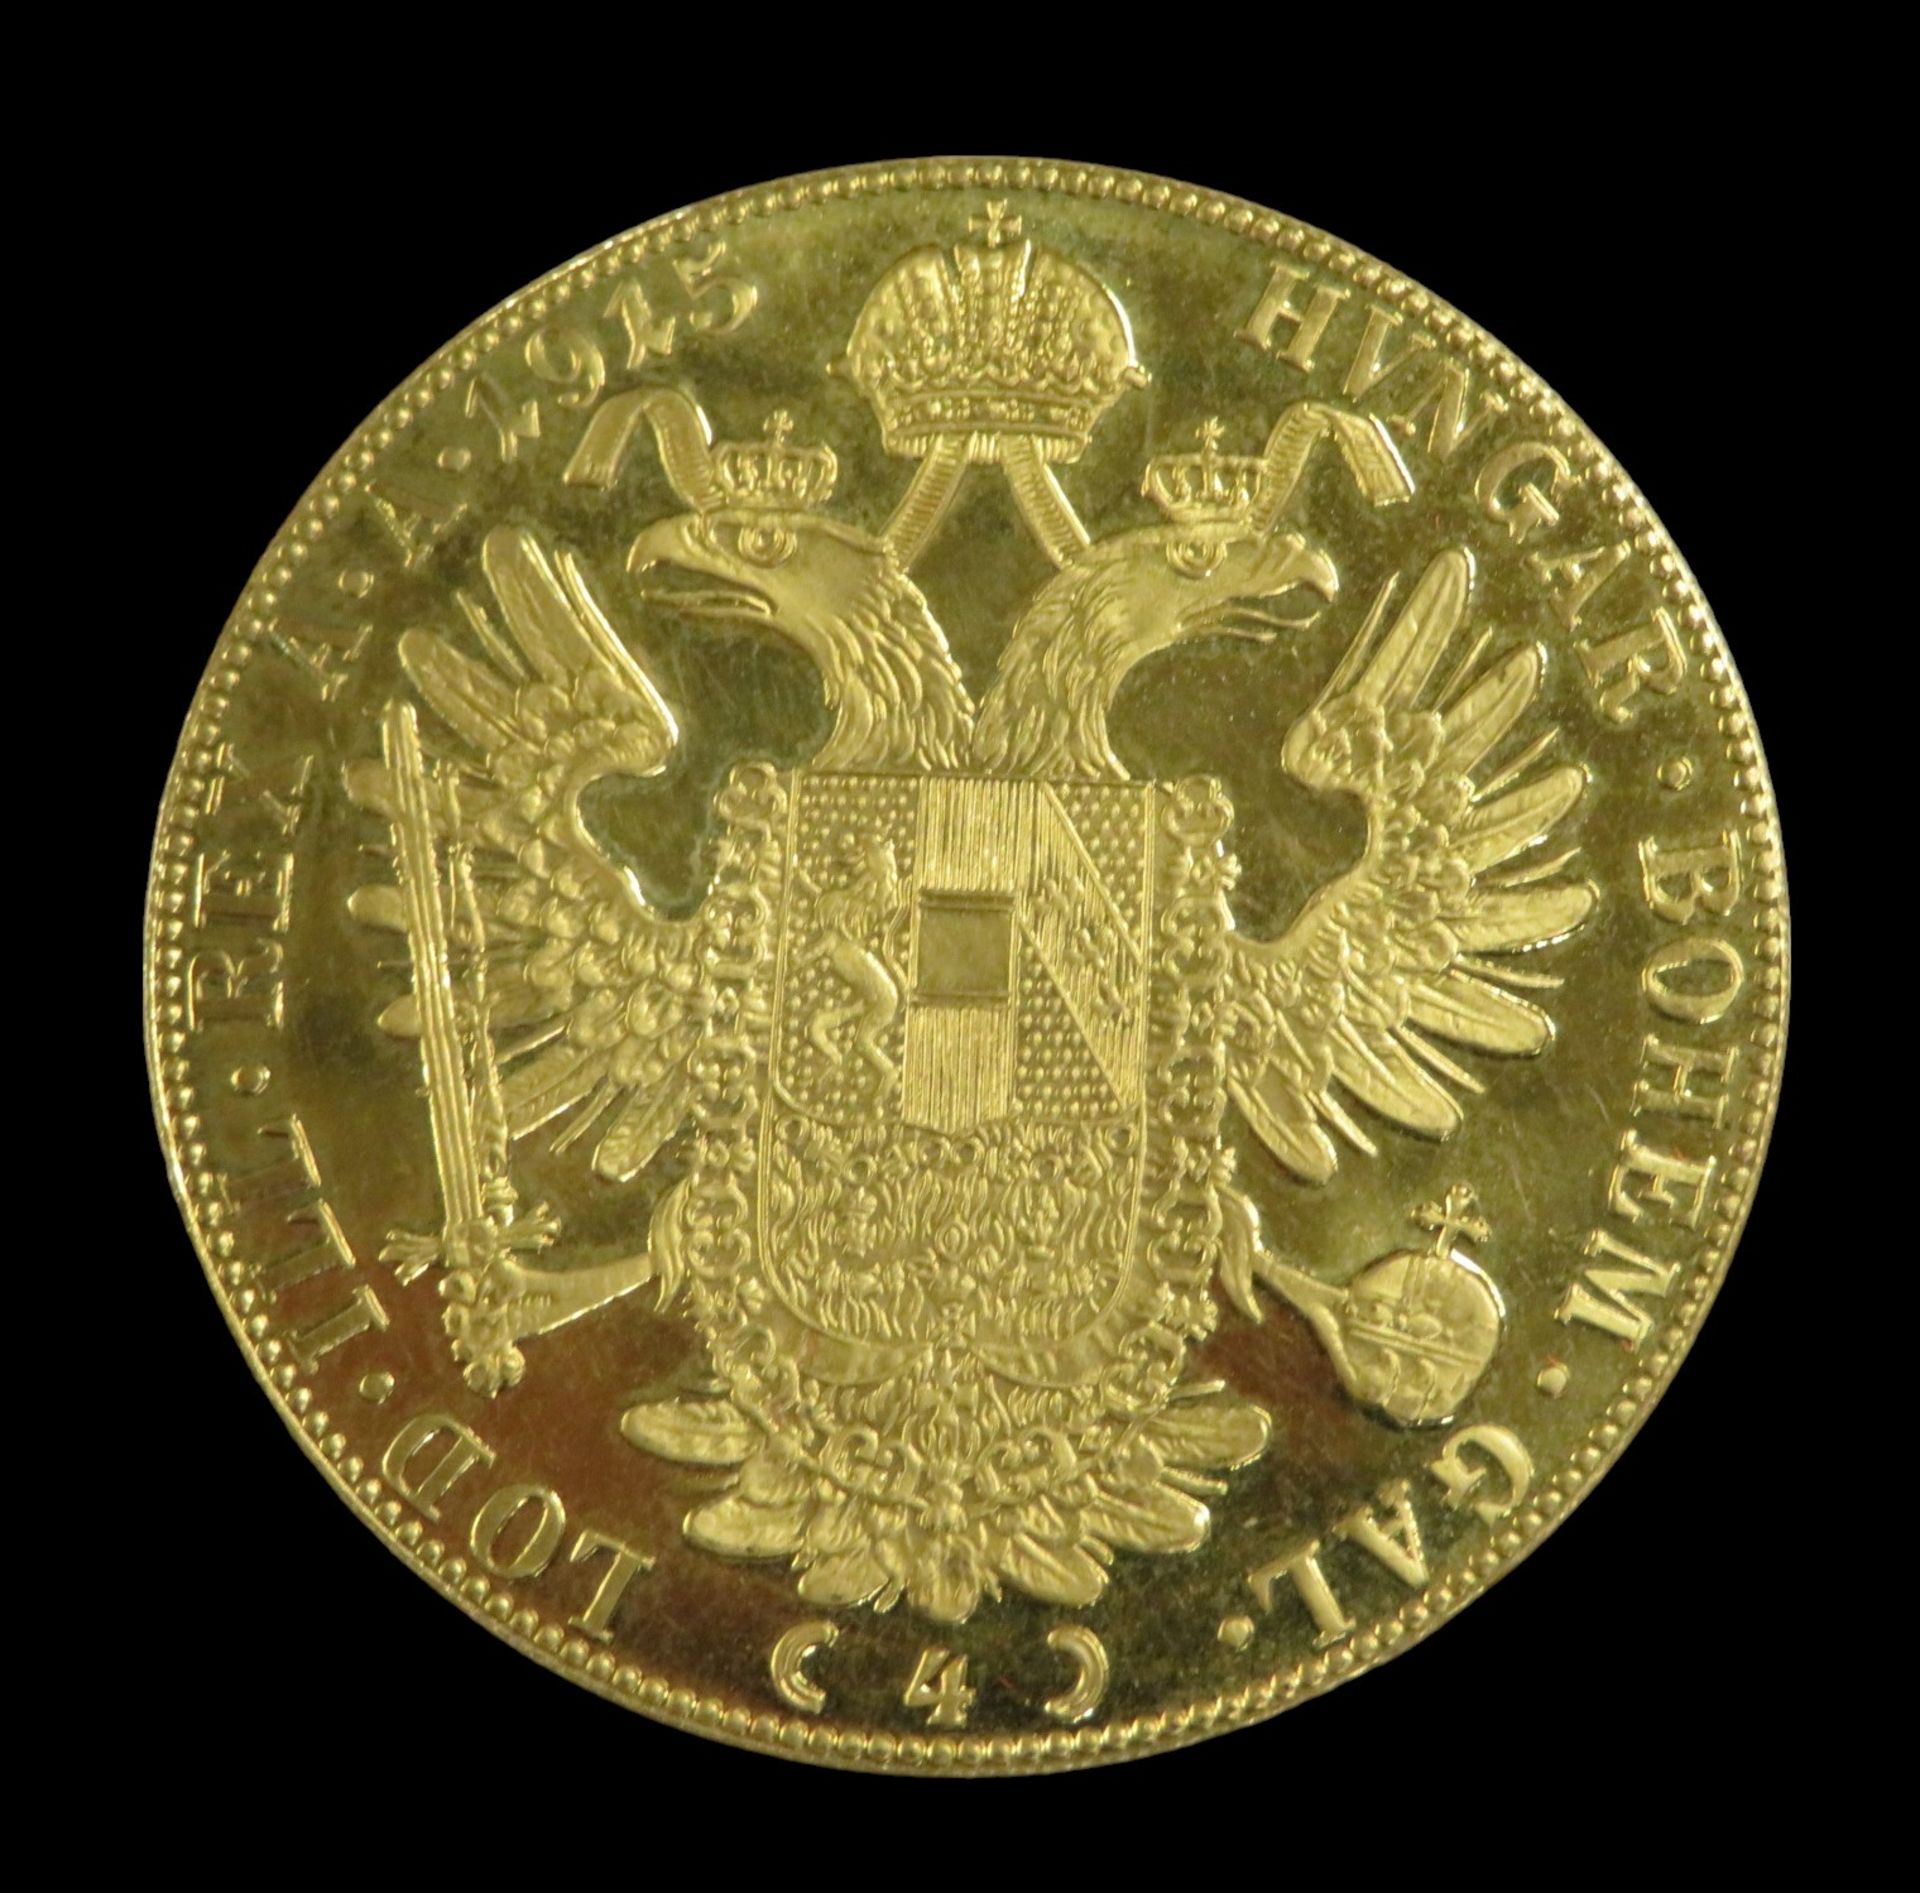 Goldmünze, 4 Dukaten, Österreich, Franz Joseph I, 1915, Gold 986/000, 13,96 g, d 3,95 cm. - Image 2 of 2